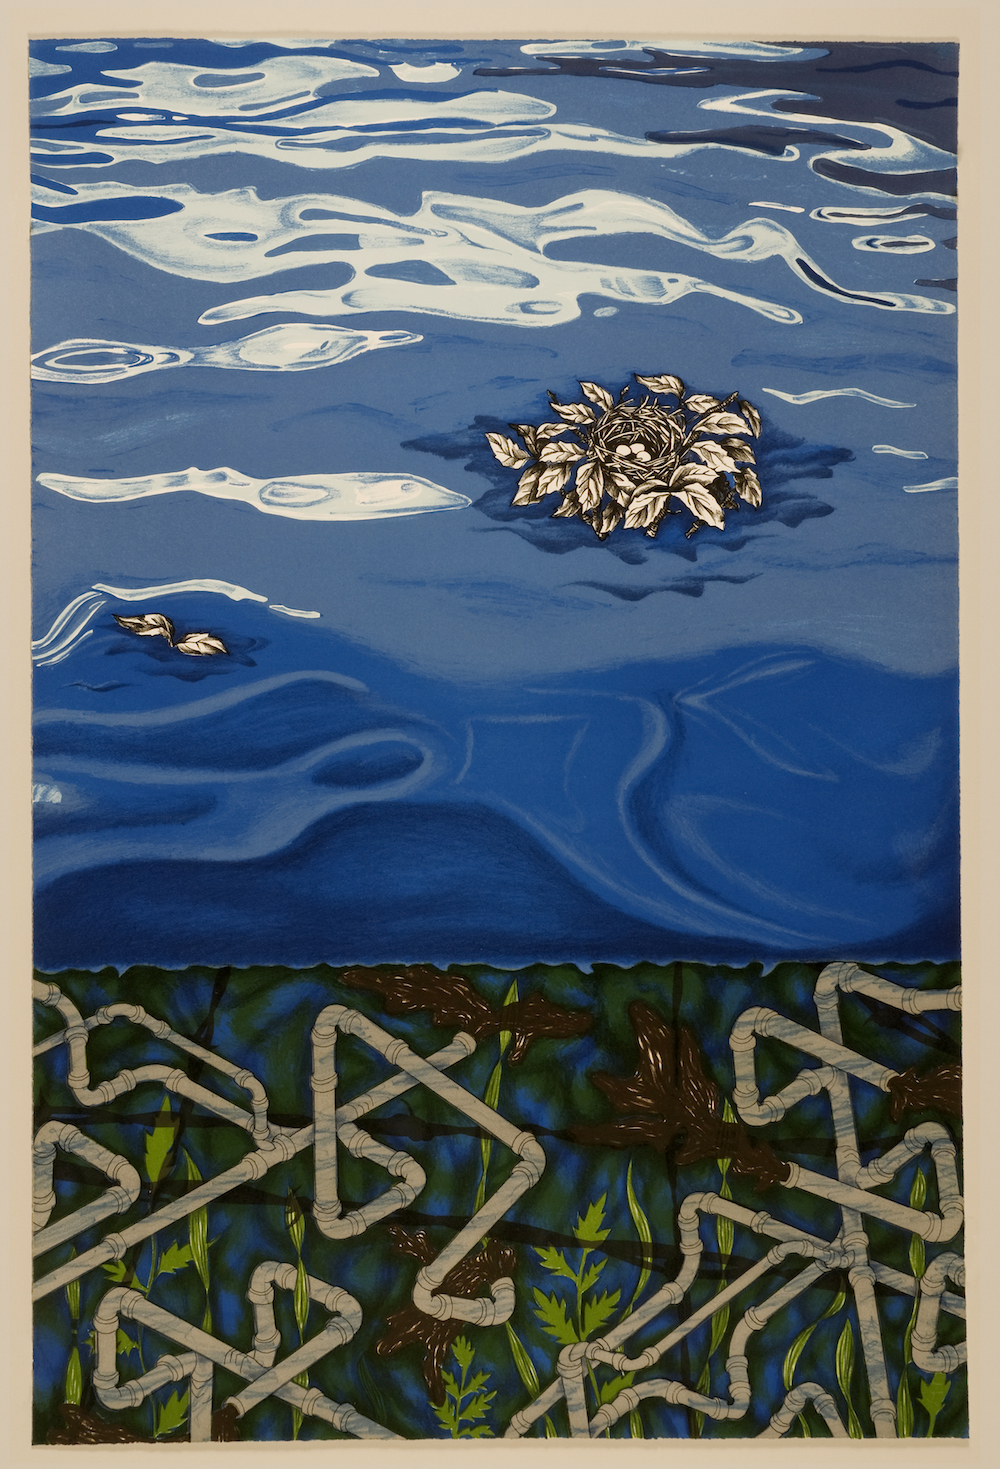 A print by Eileen Foti titled Life Raft